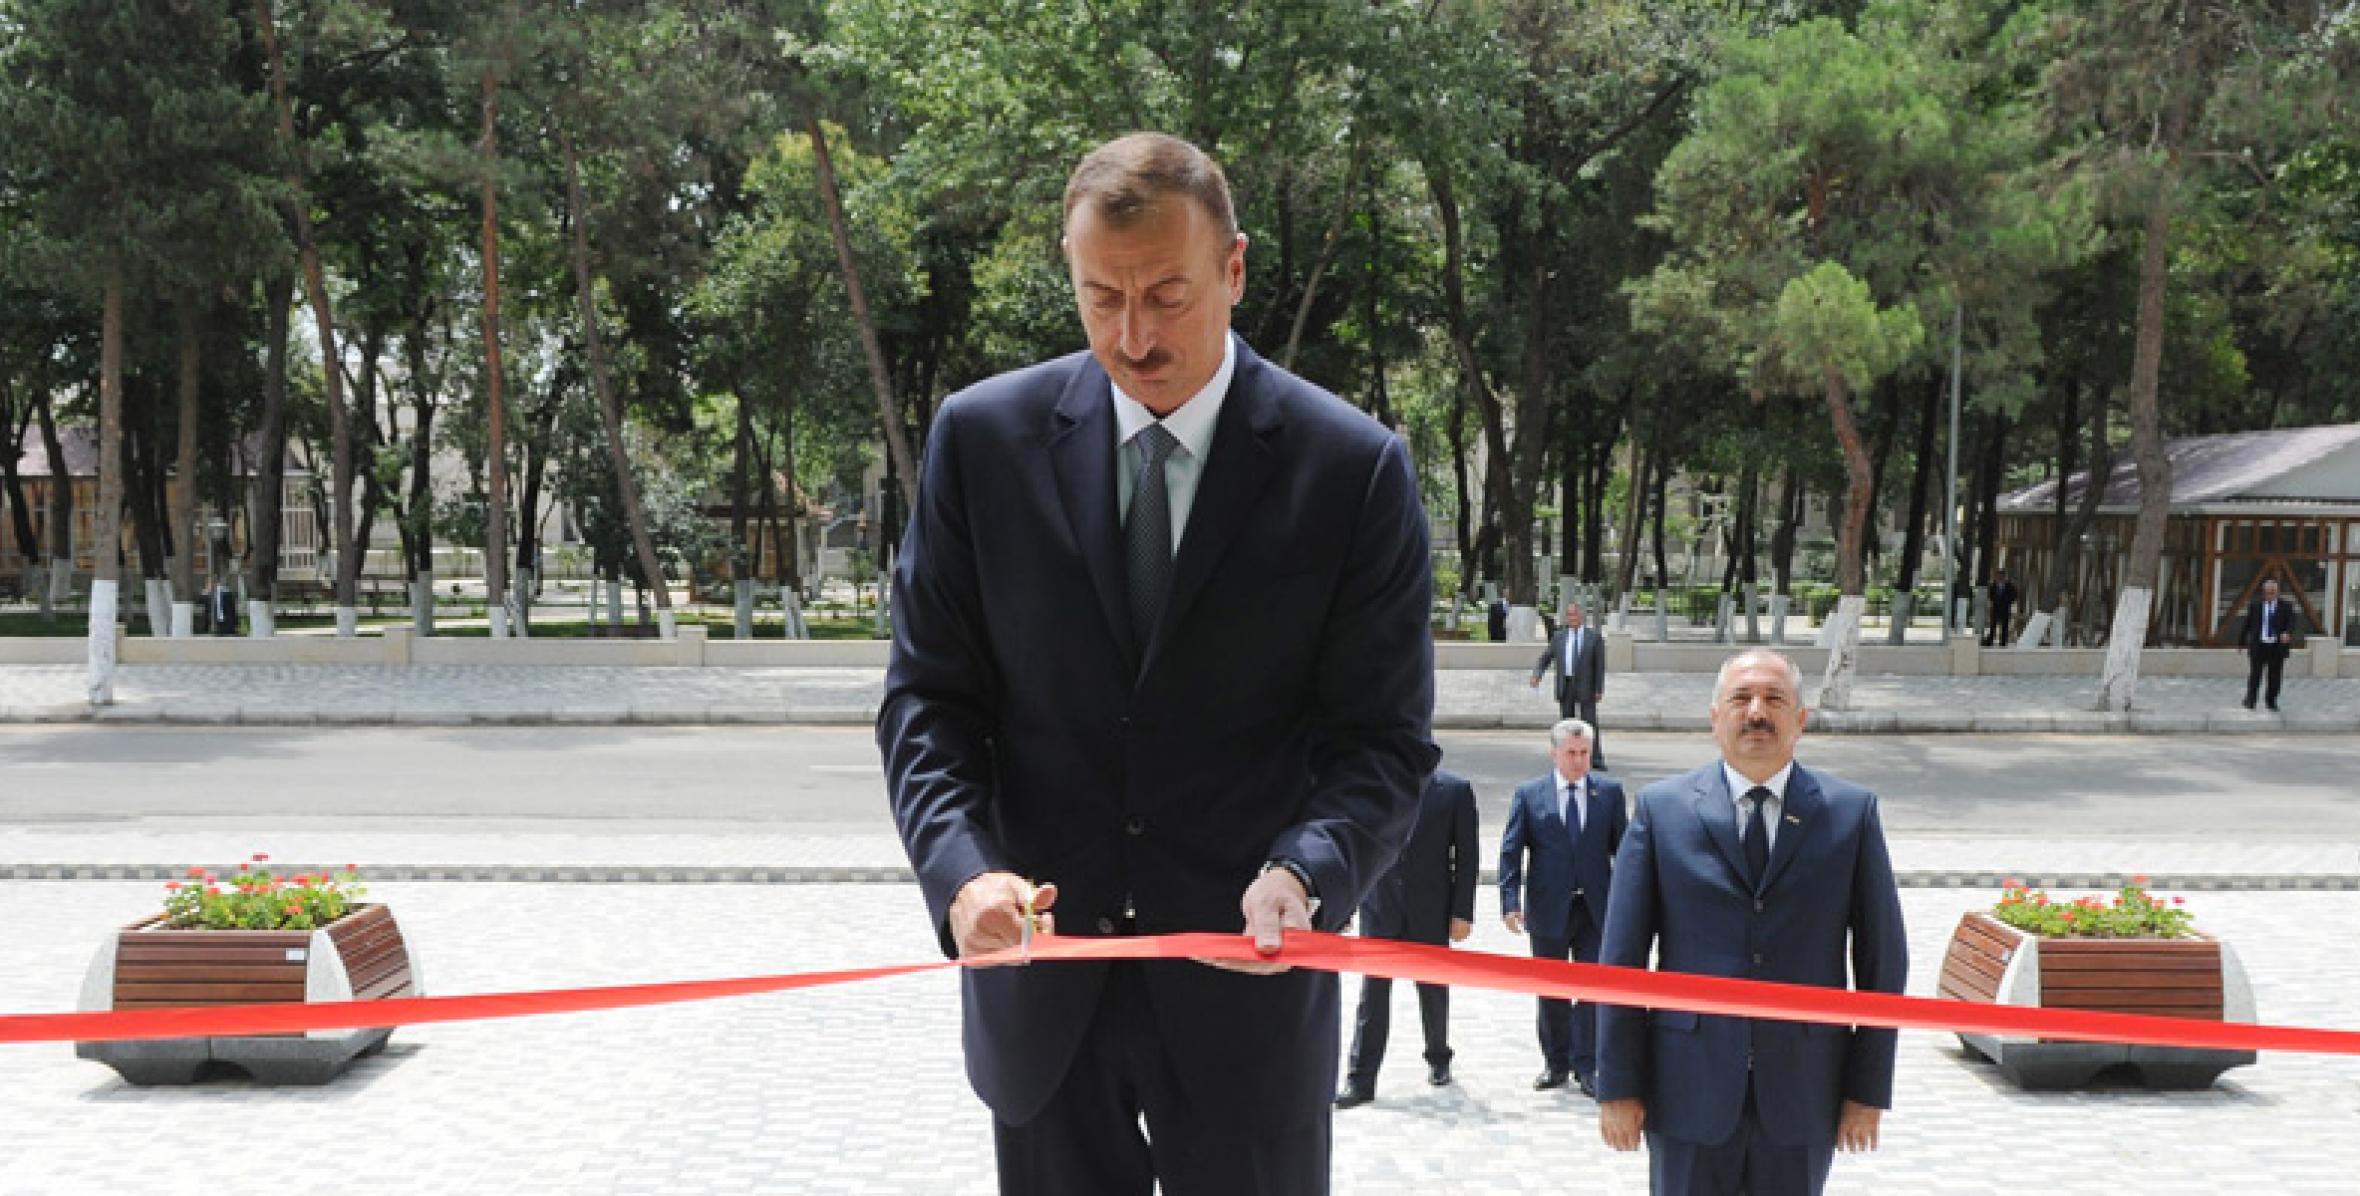 Ilham Aliyev attended the opening of the Heydar Aliyev Creativity Center in Jalilabad